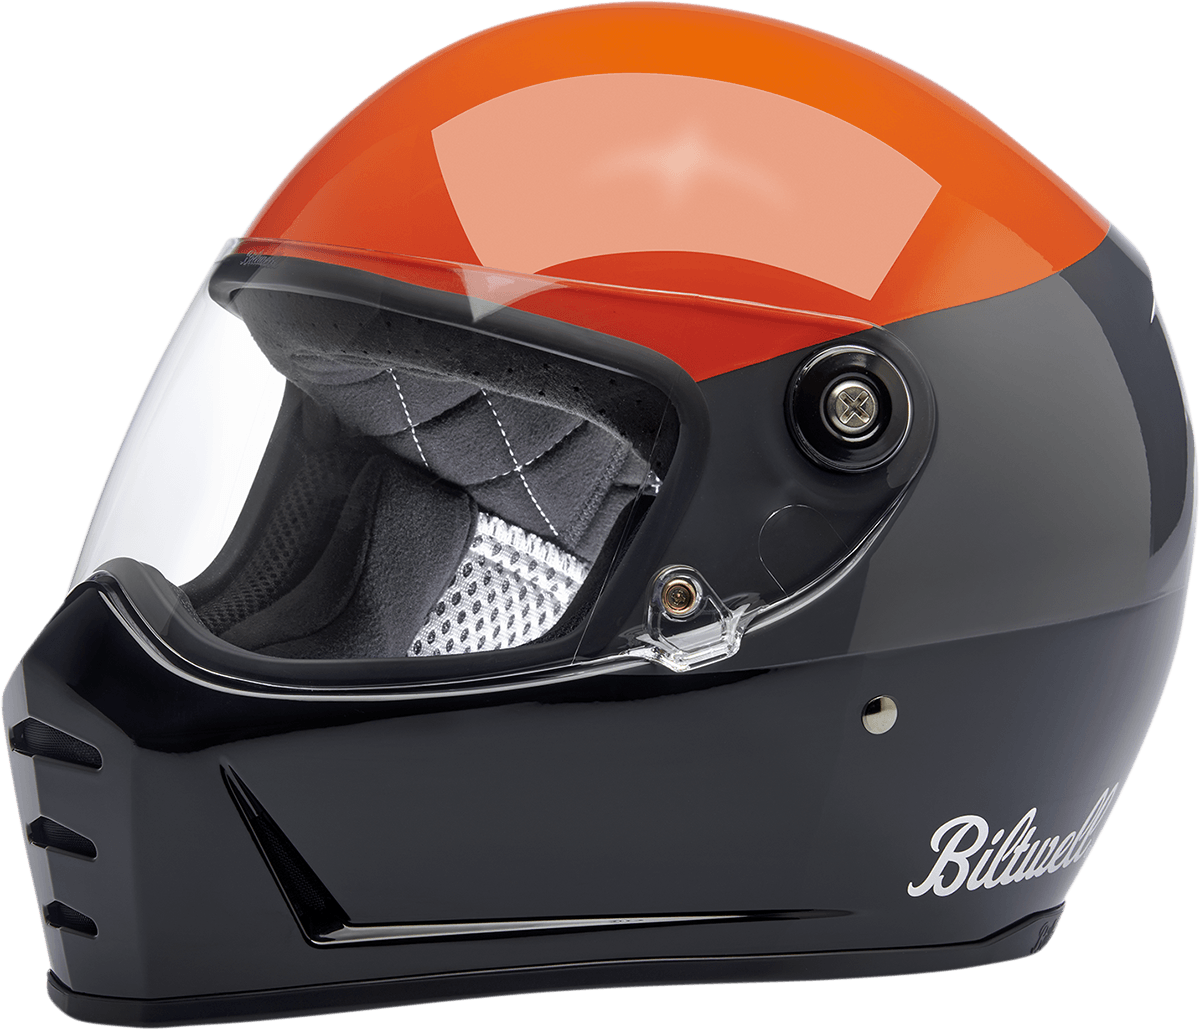 BILTWELL-Lane Splitter Helmet / Podium Orange Grey Black-Helmet-MetalCore Harley Supply